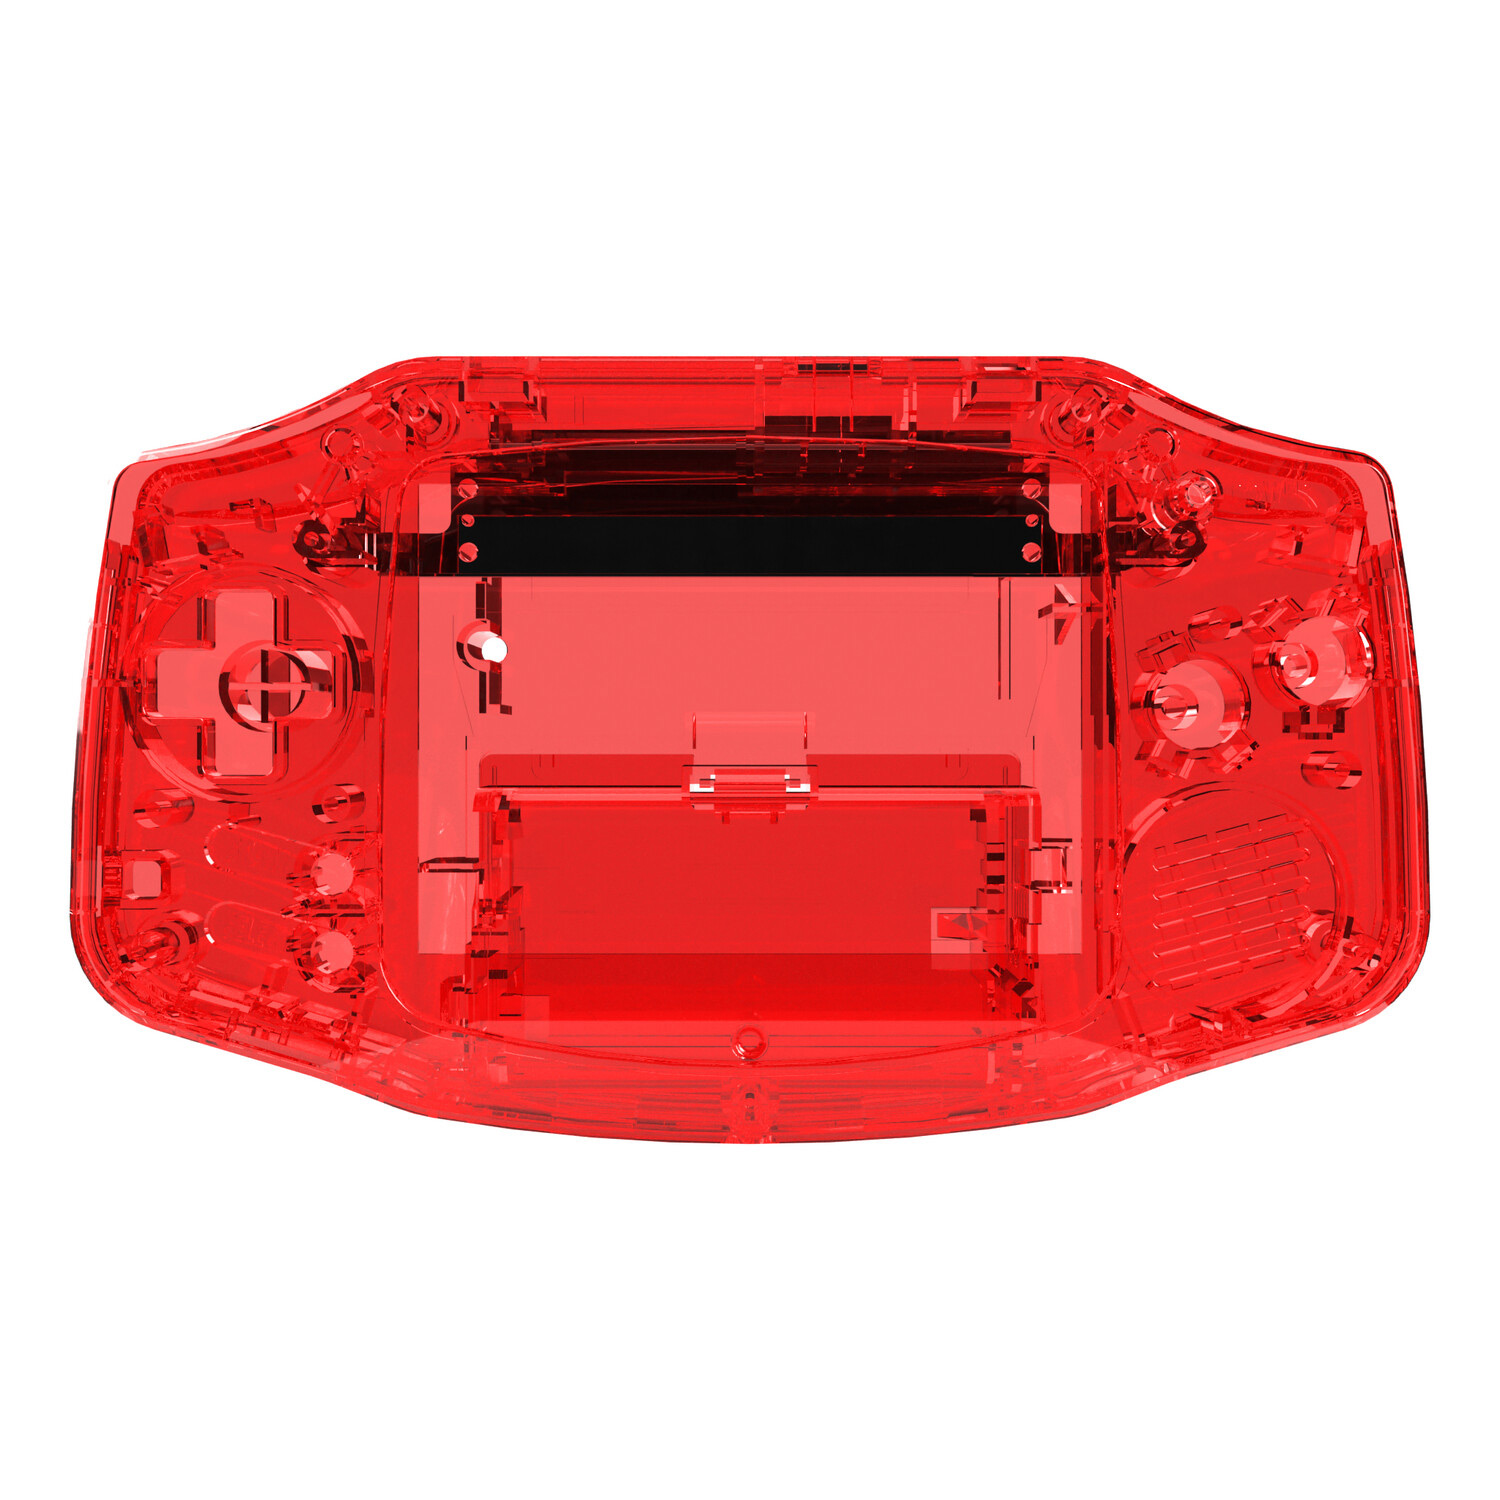 Game Boy Advance Gehäuse (Crystal Red)